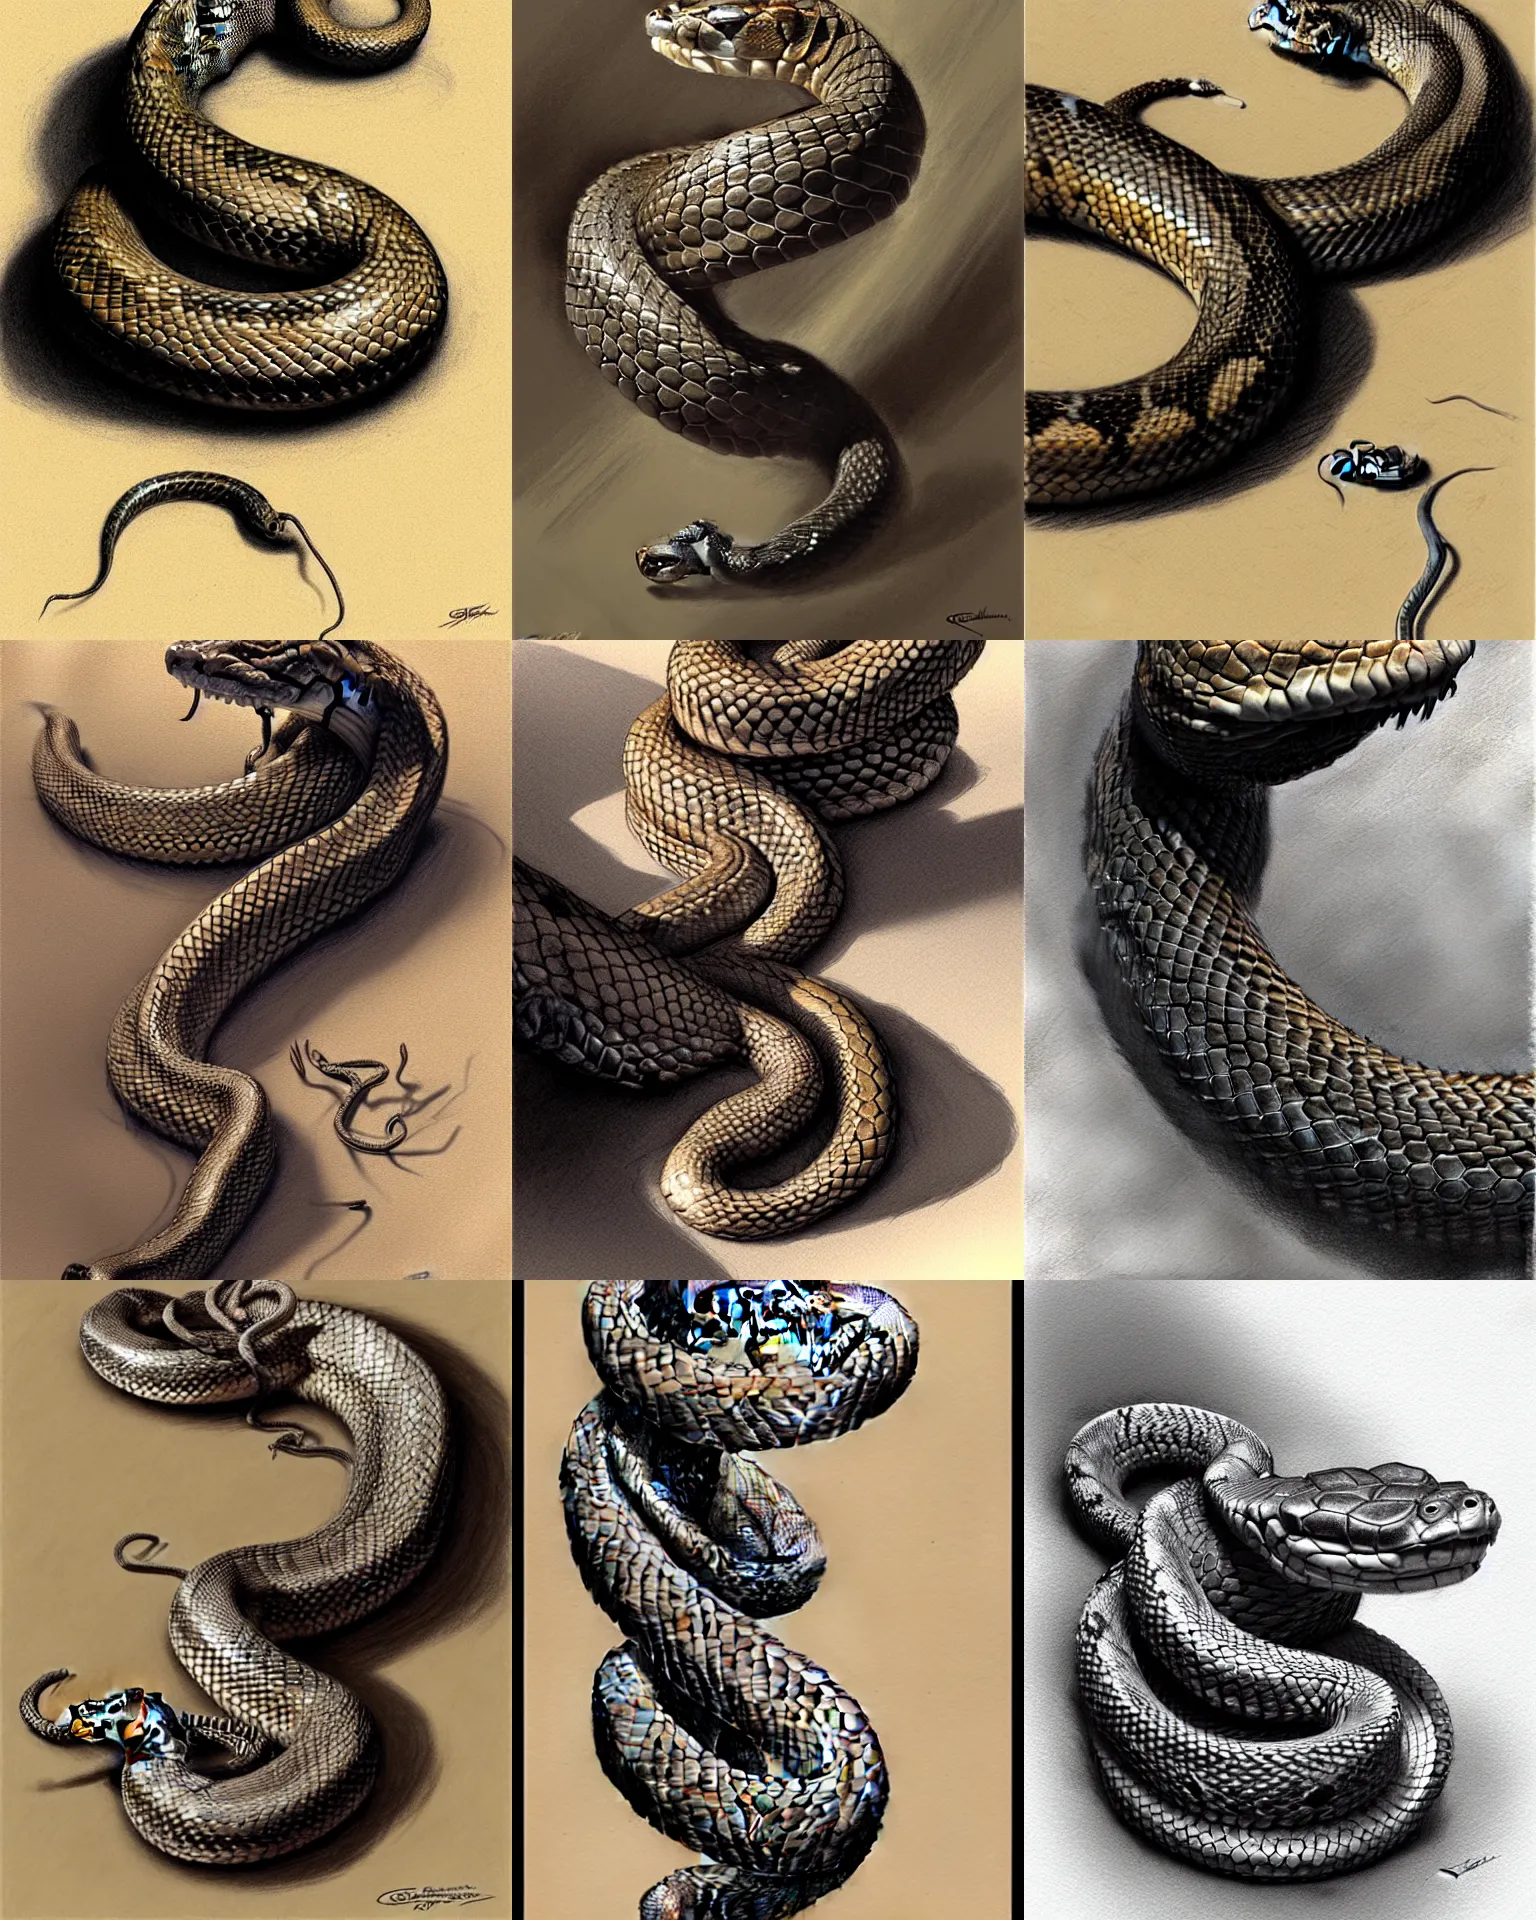 Stunning Cobra and Python Snake Stickers